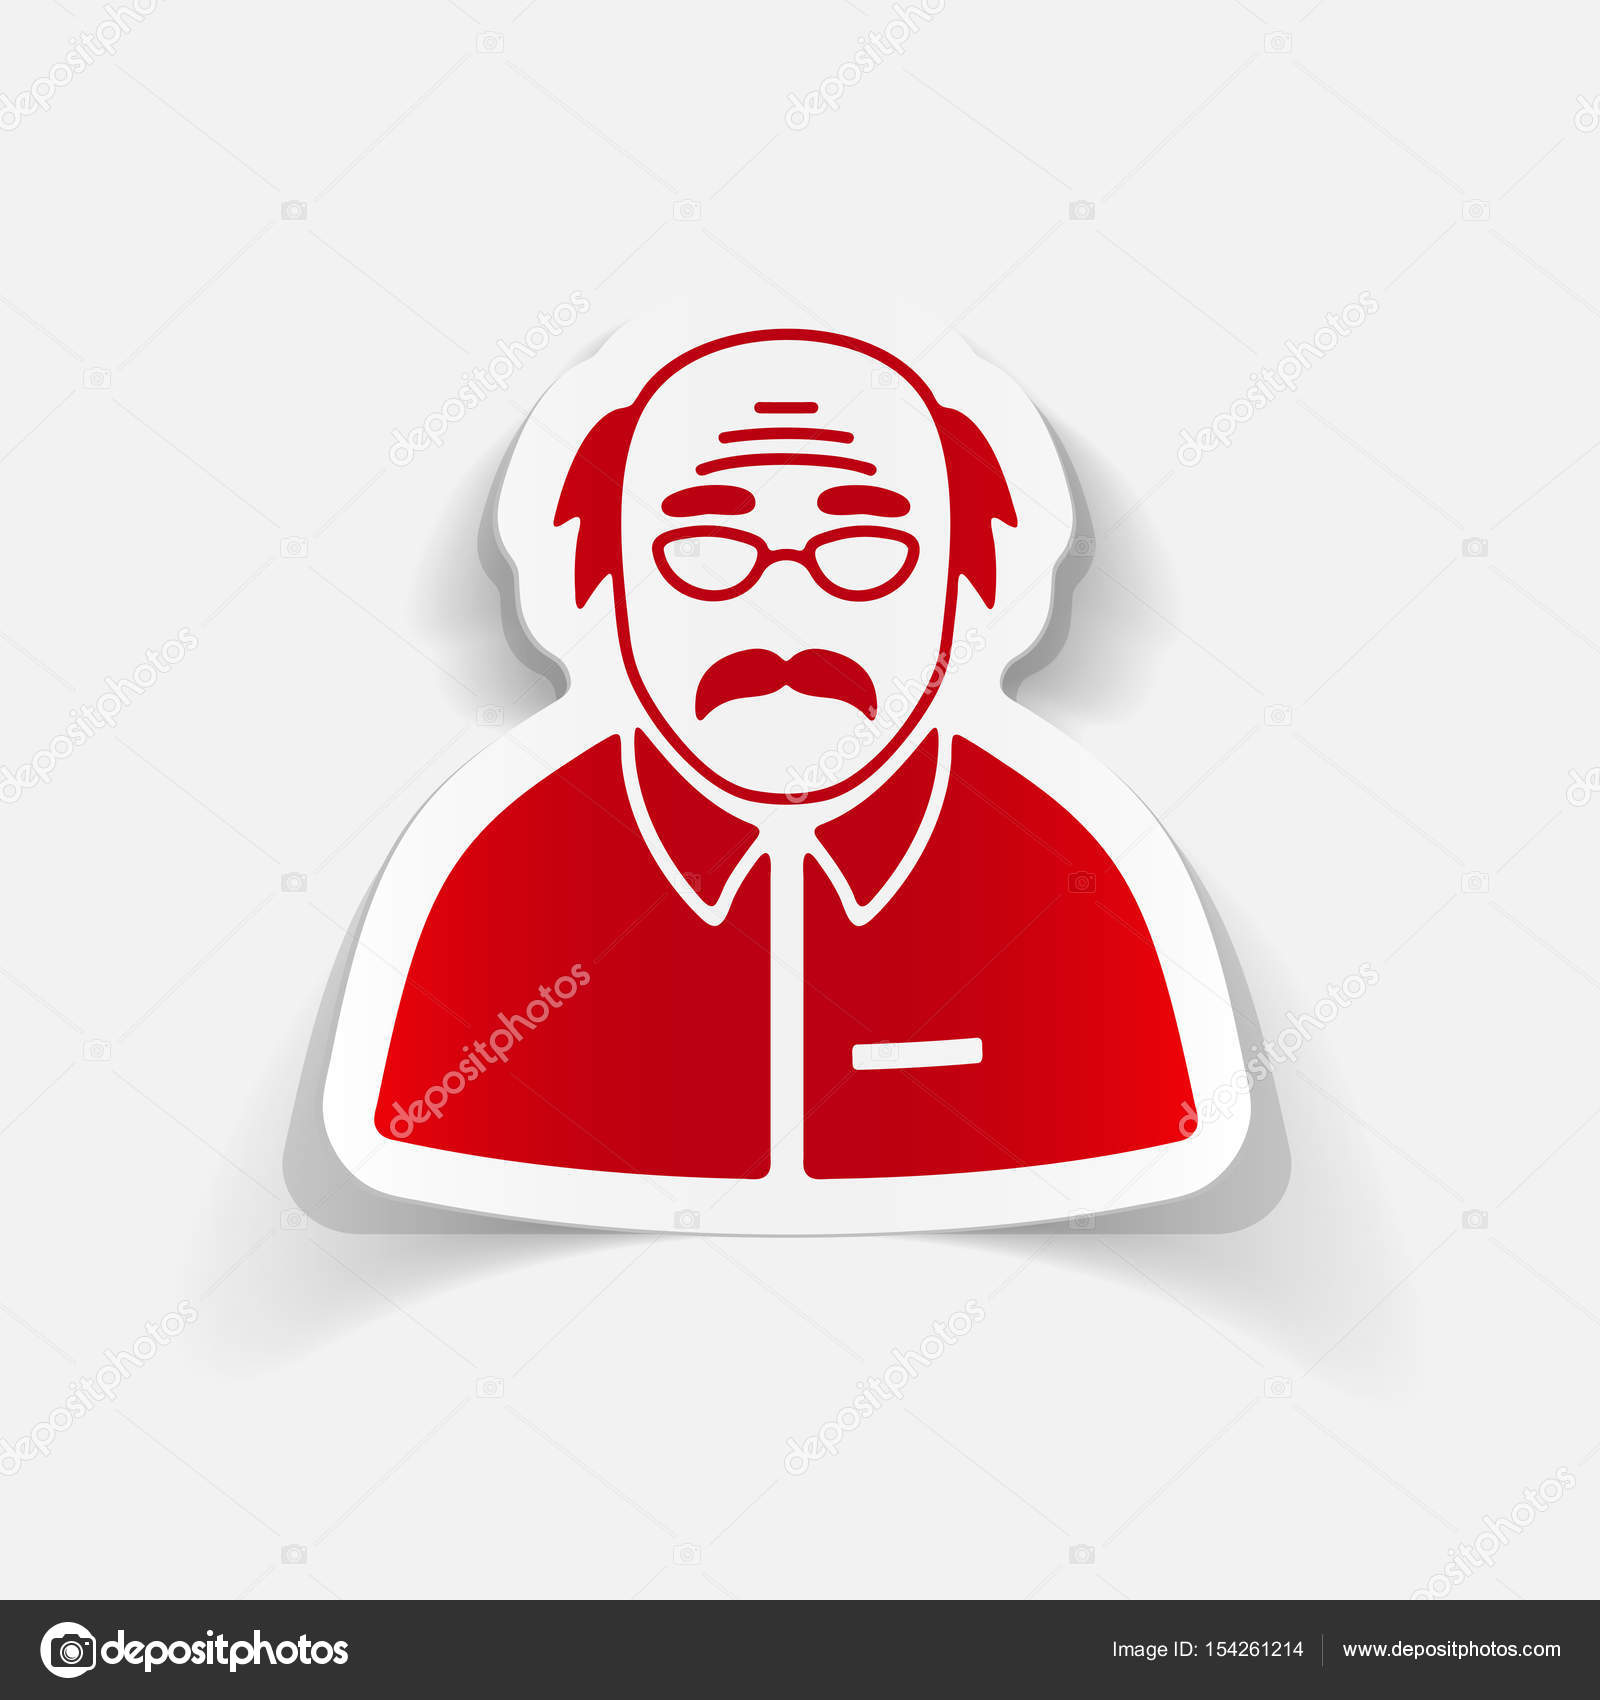 Senior icons | Noun Project